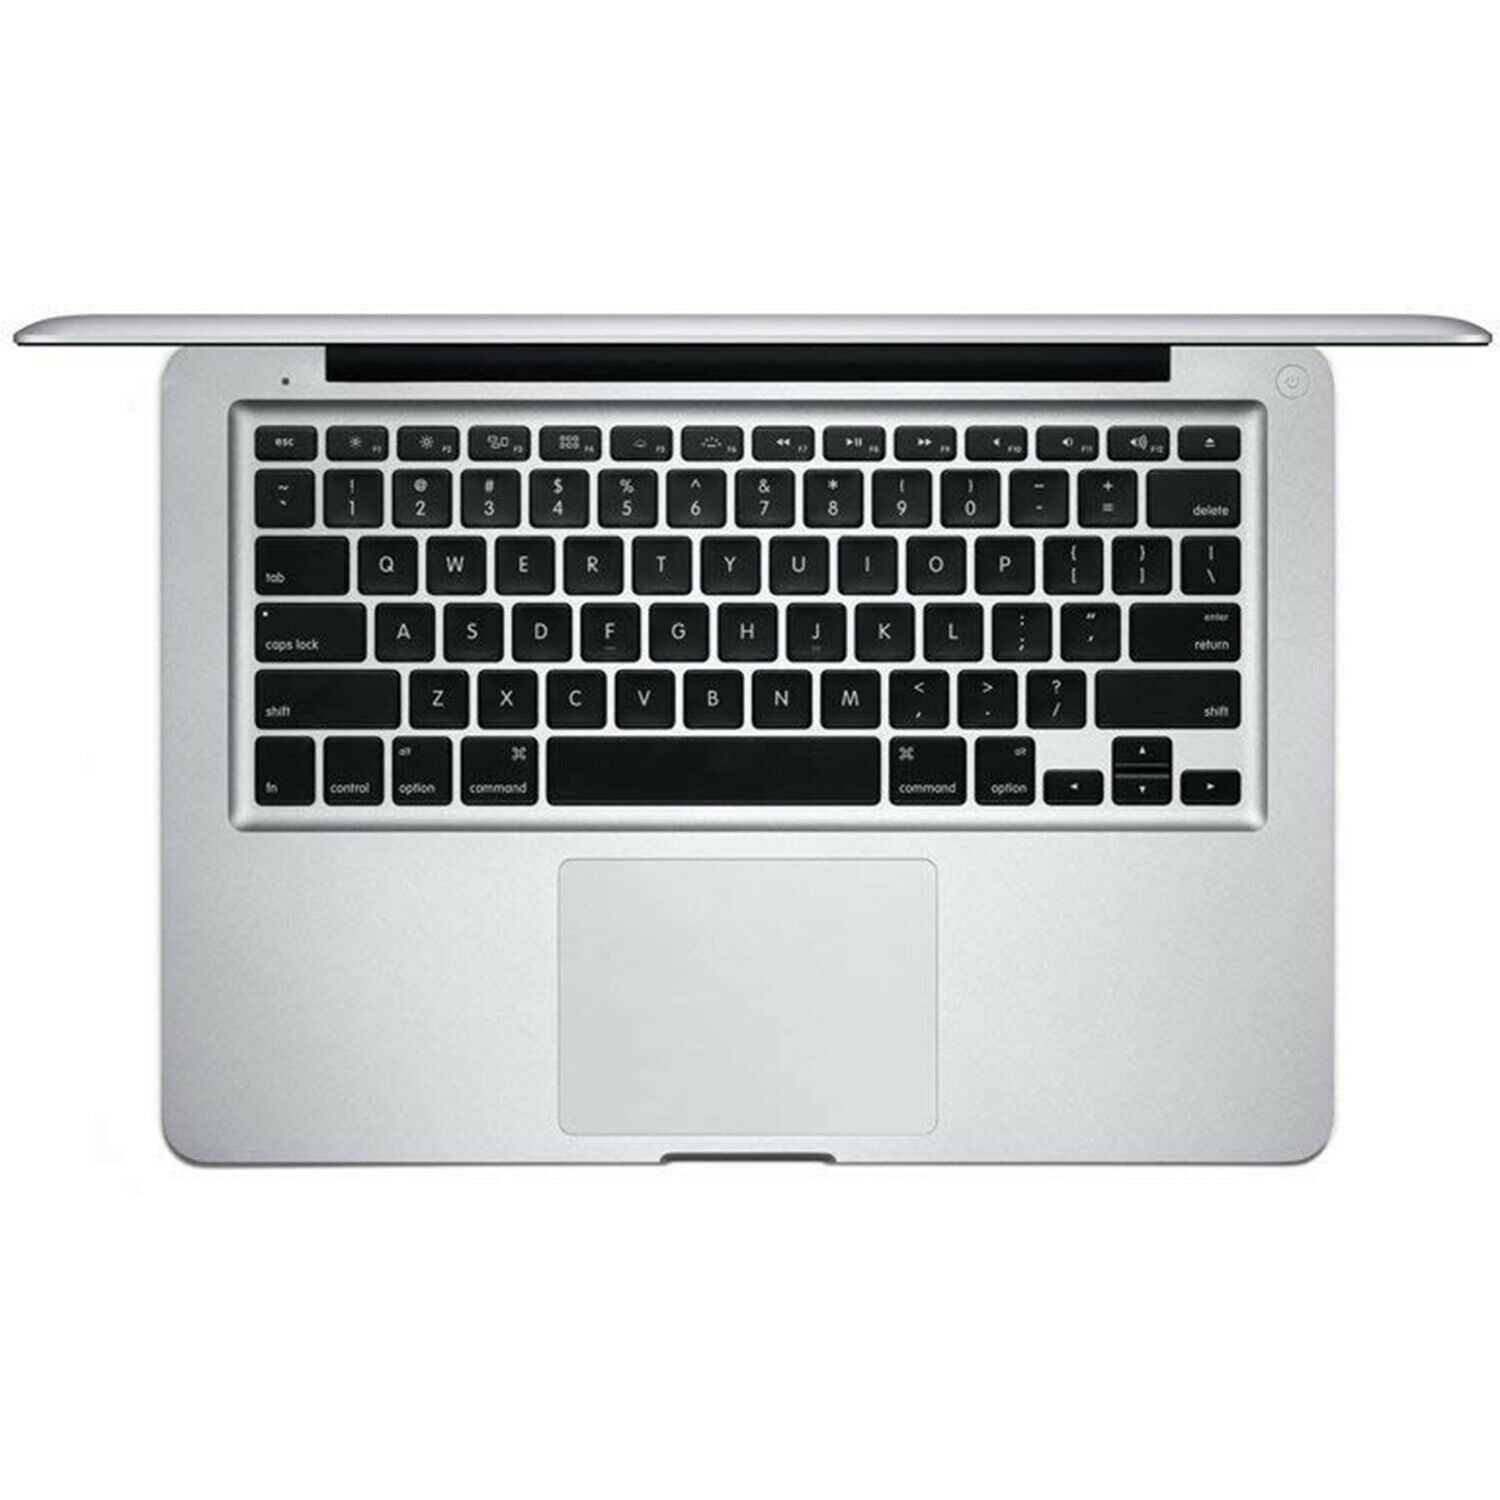 MacBook Pro 13" (2011) Silver - Intel Core i5, 2.4GHZ, 4GB, 500GB - 90 Day Warranty (renew) - Thunderb Store